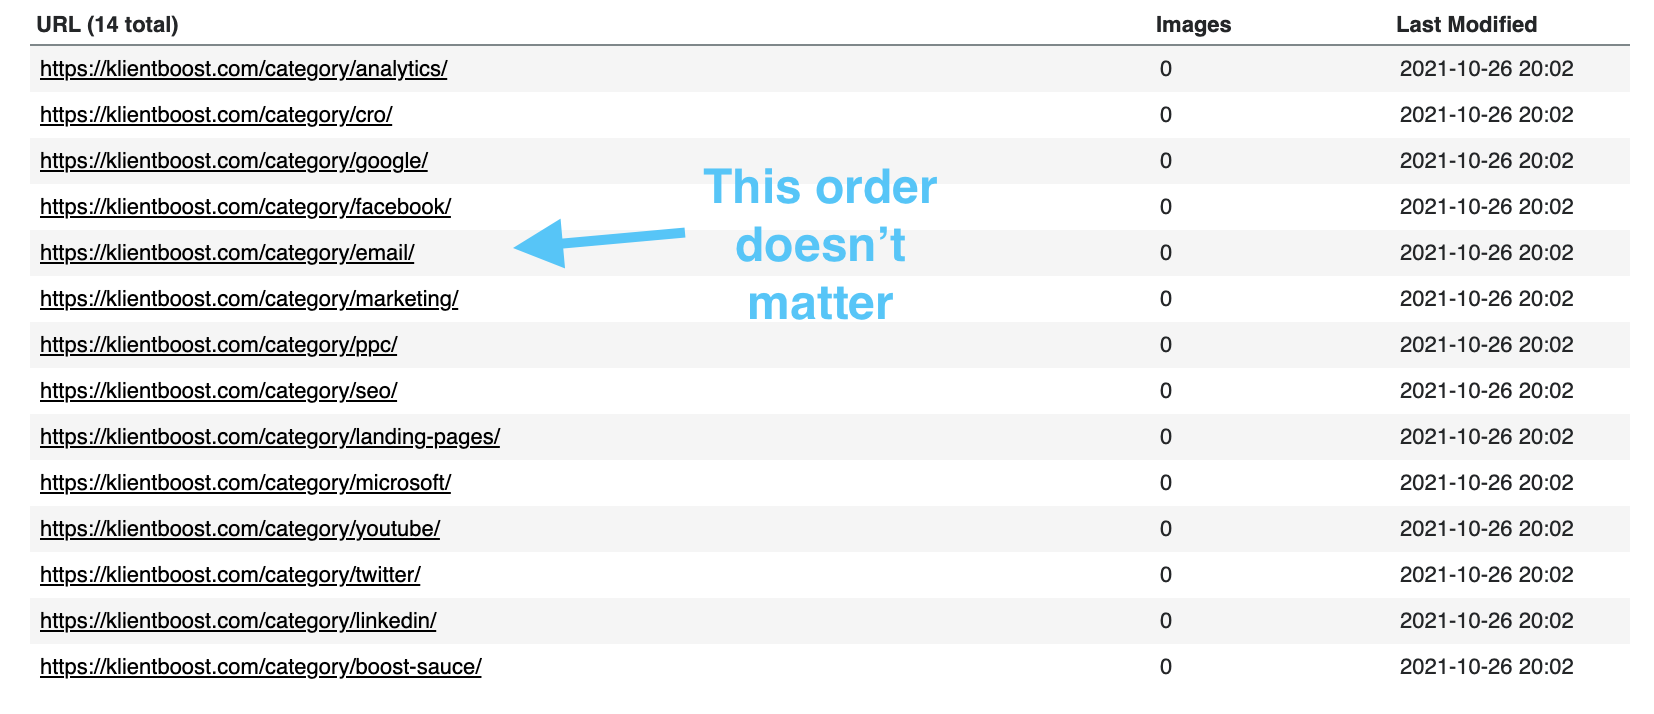 URL order does not matter